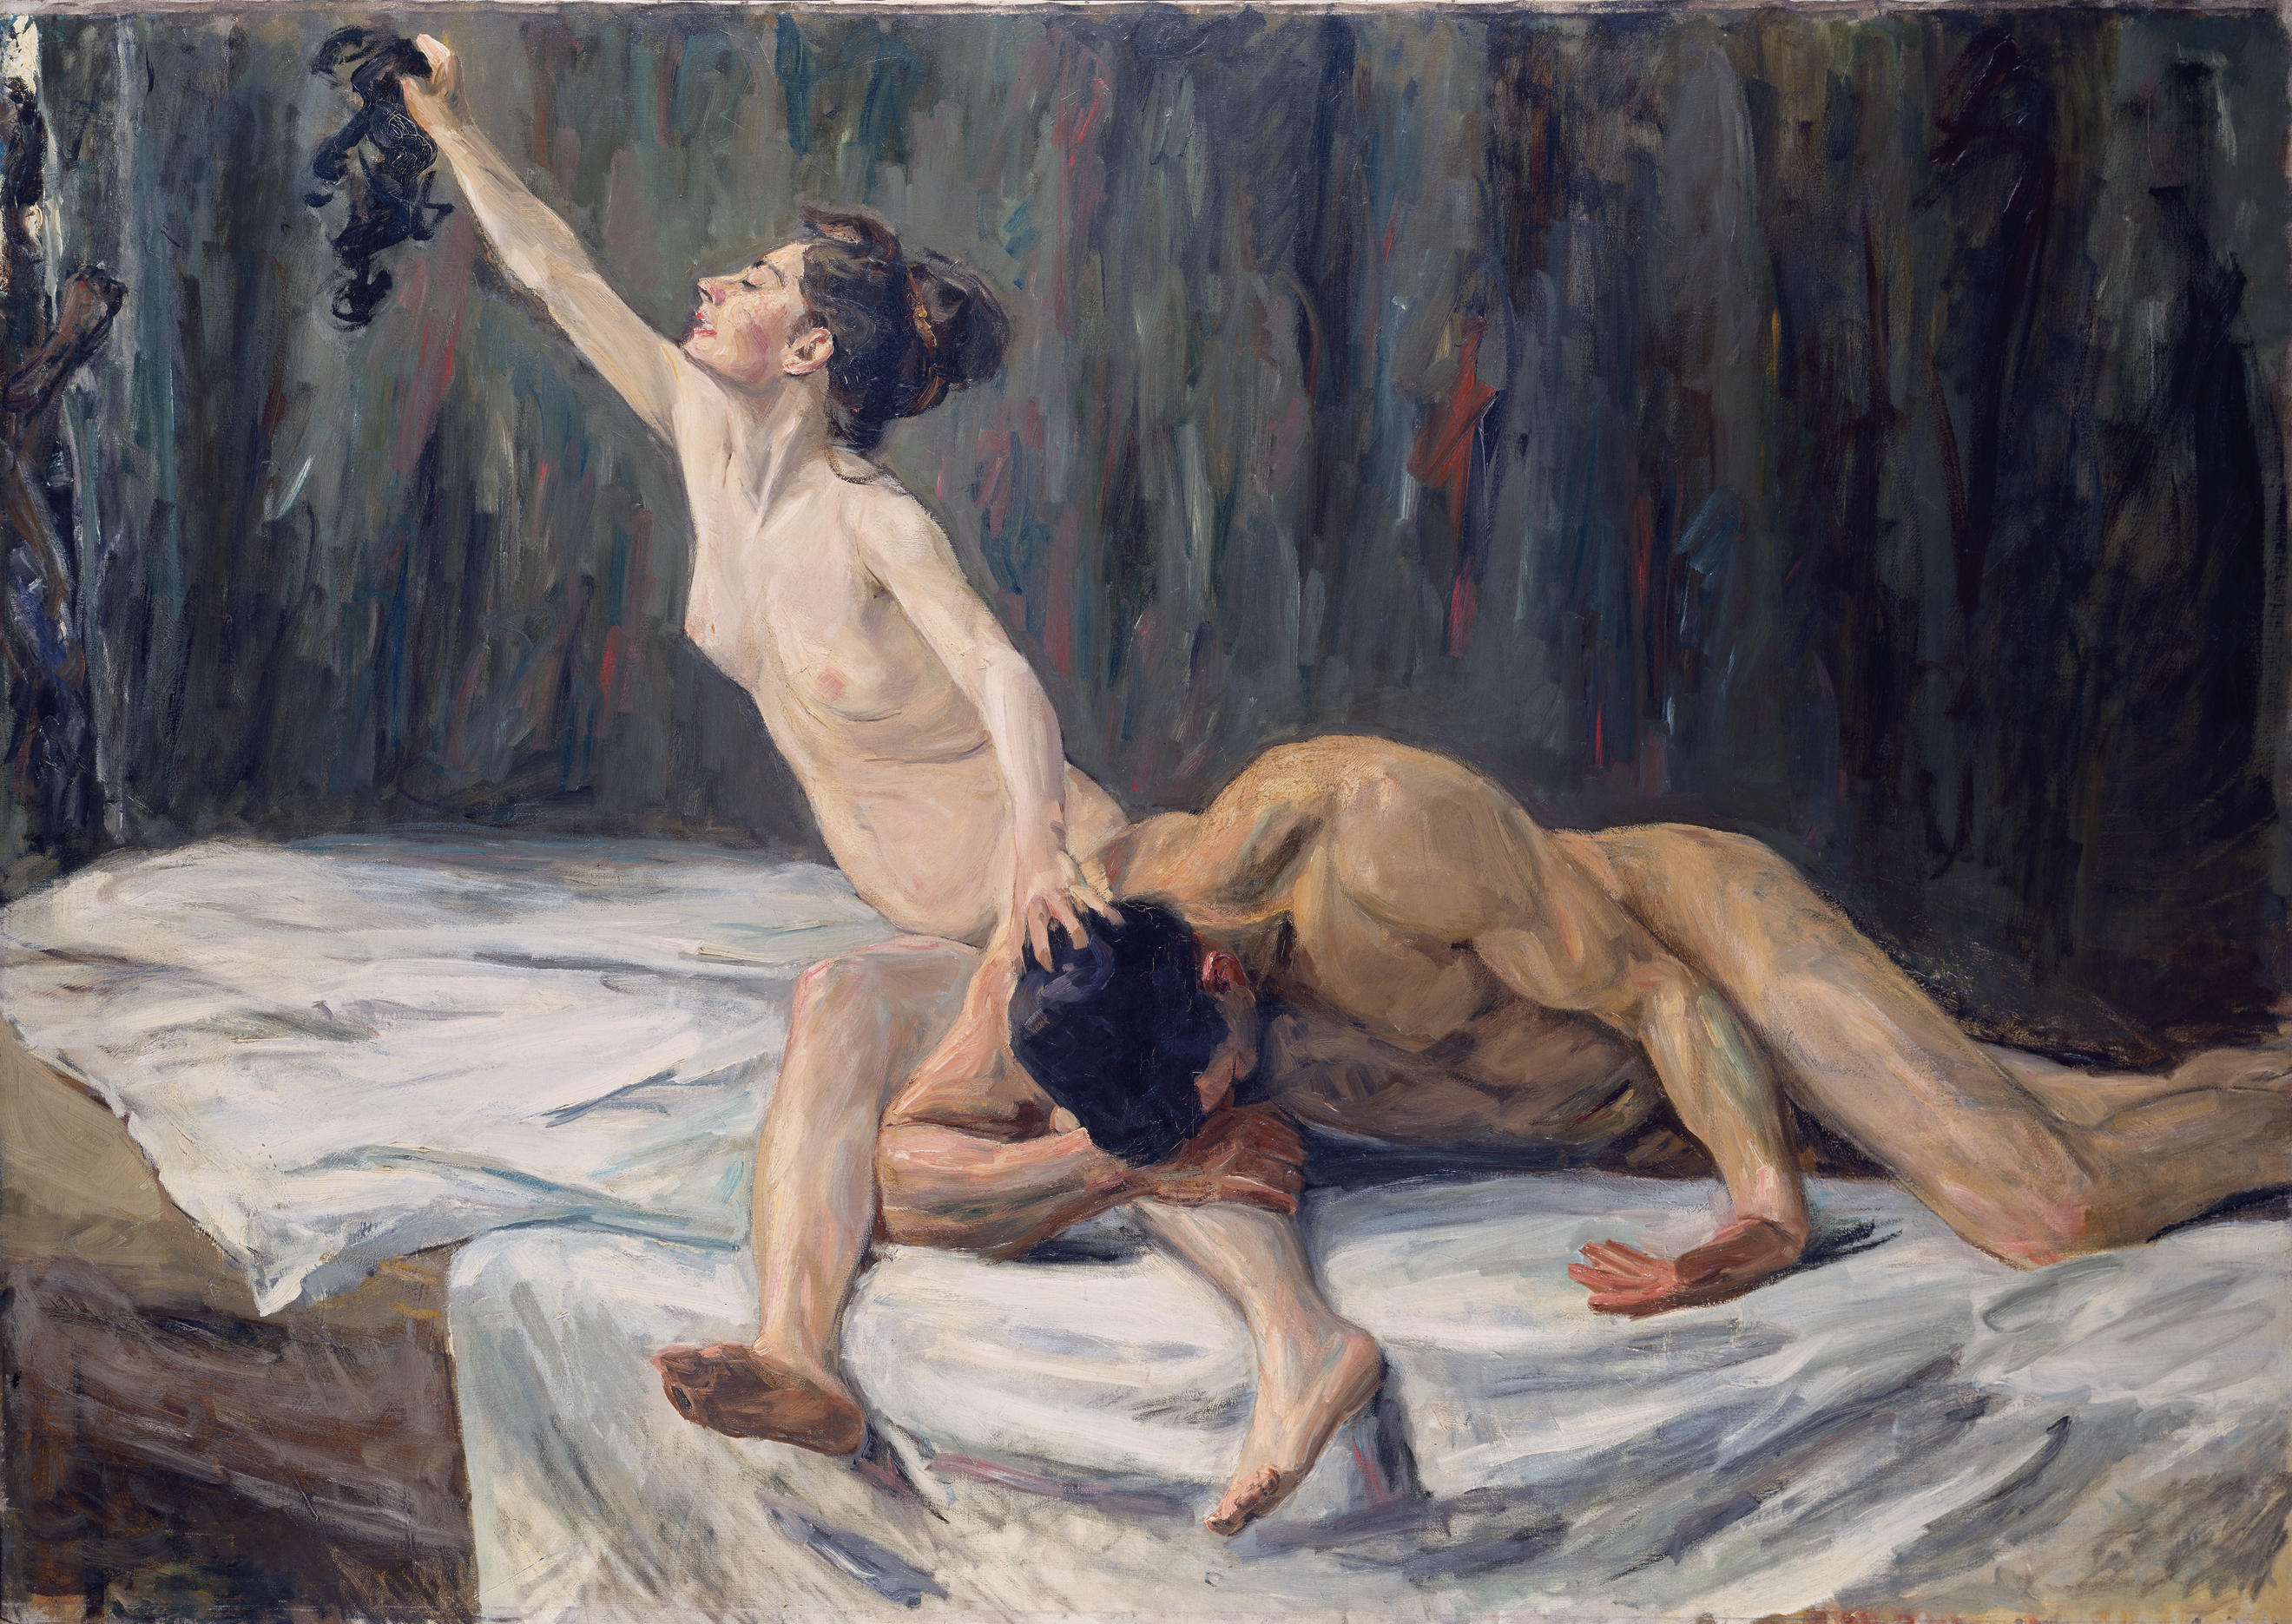 Samson and Delilah by Max Liebermann - 1902 - 151.2 x 212.0 cm Städel Museum